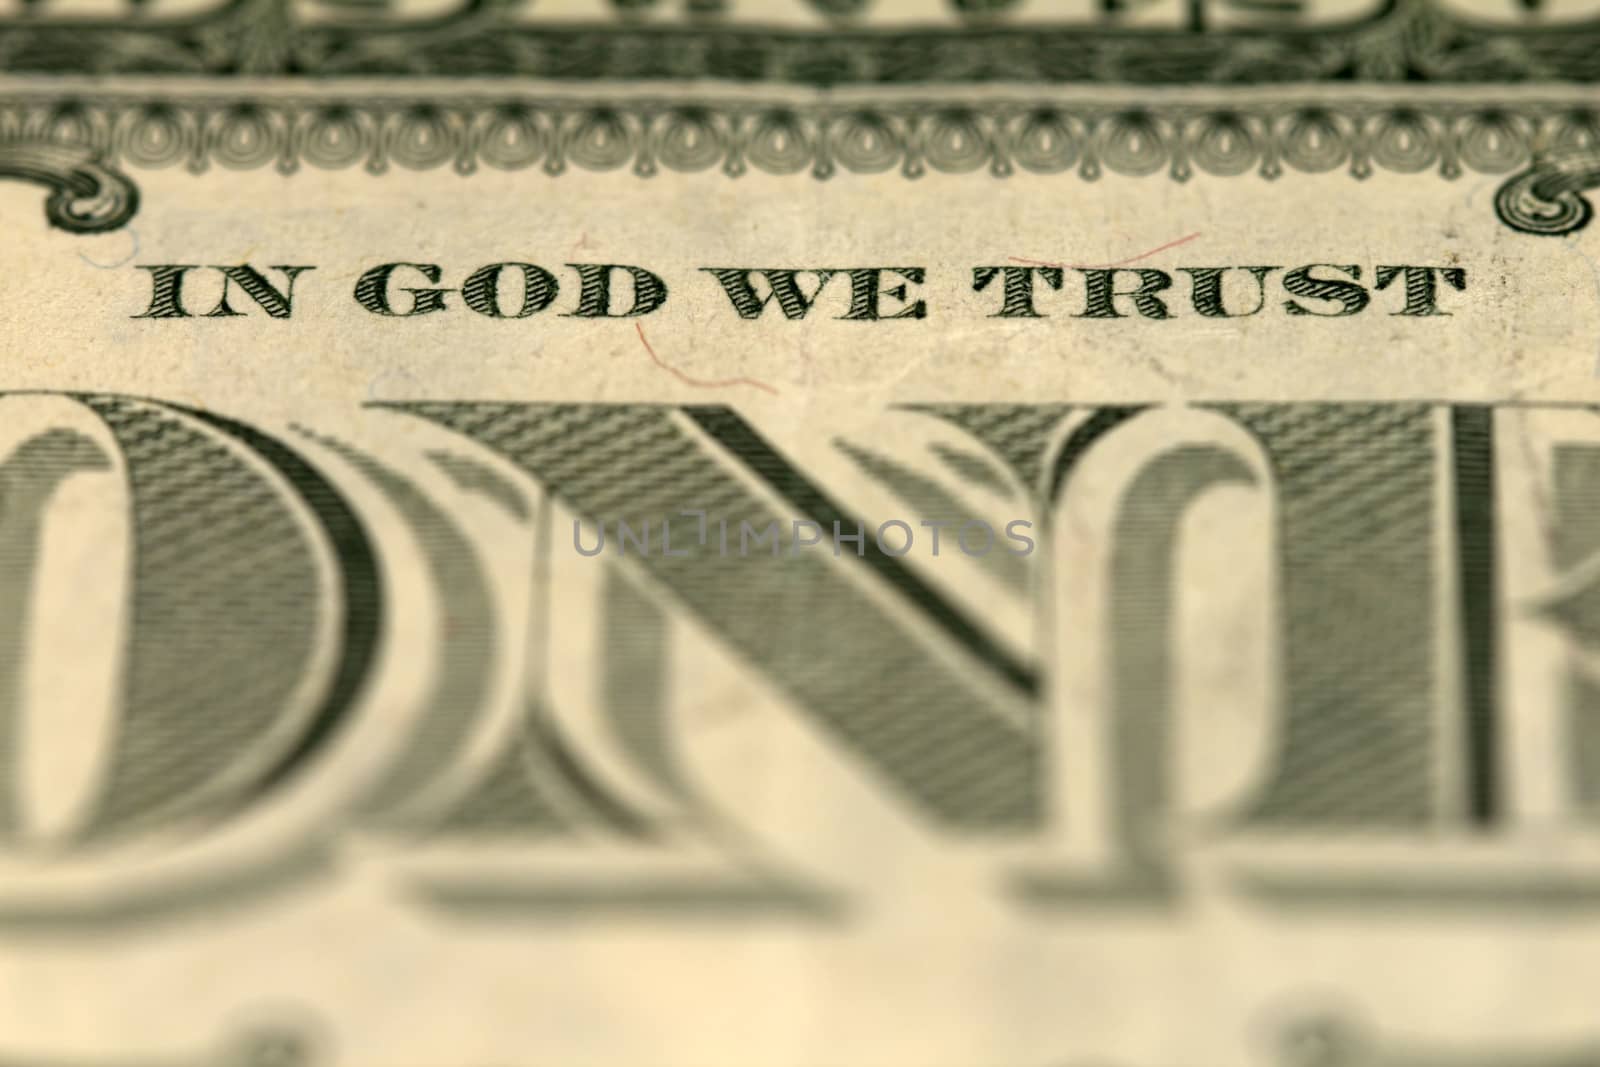 In God we trust - banknote one dollar by DeoSum